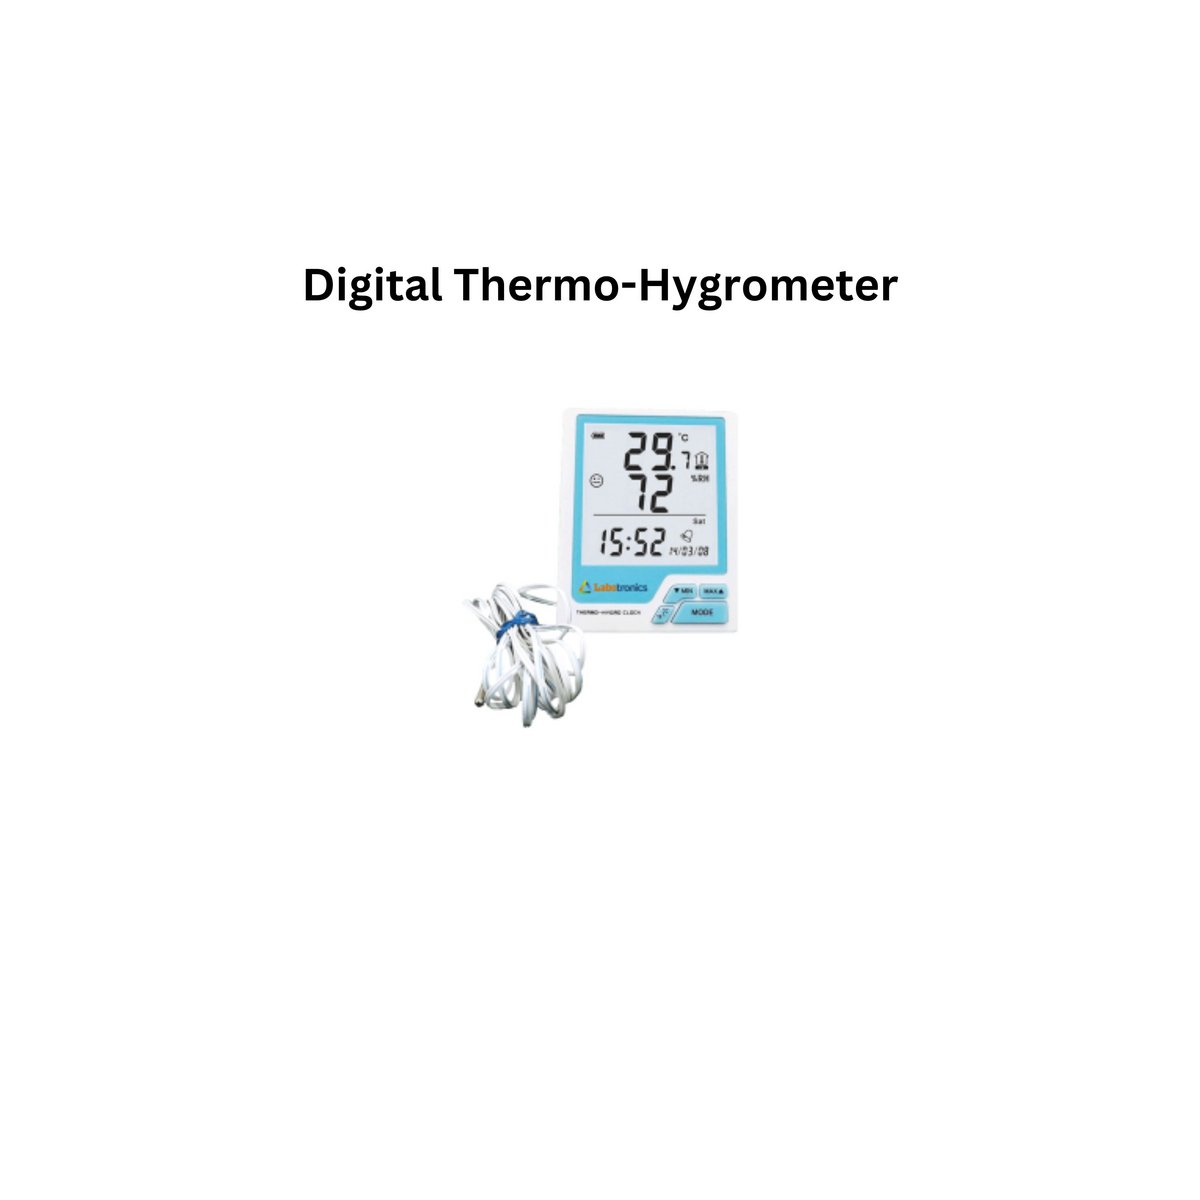 Digital Thermo-Hygrometer.jpg